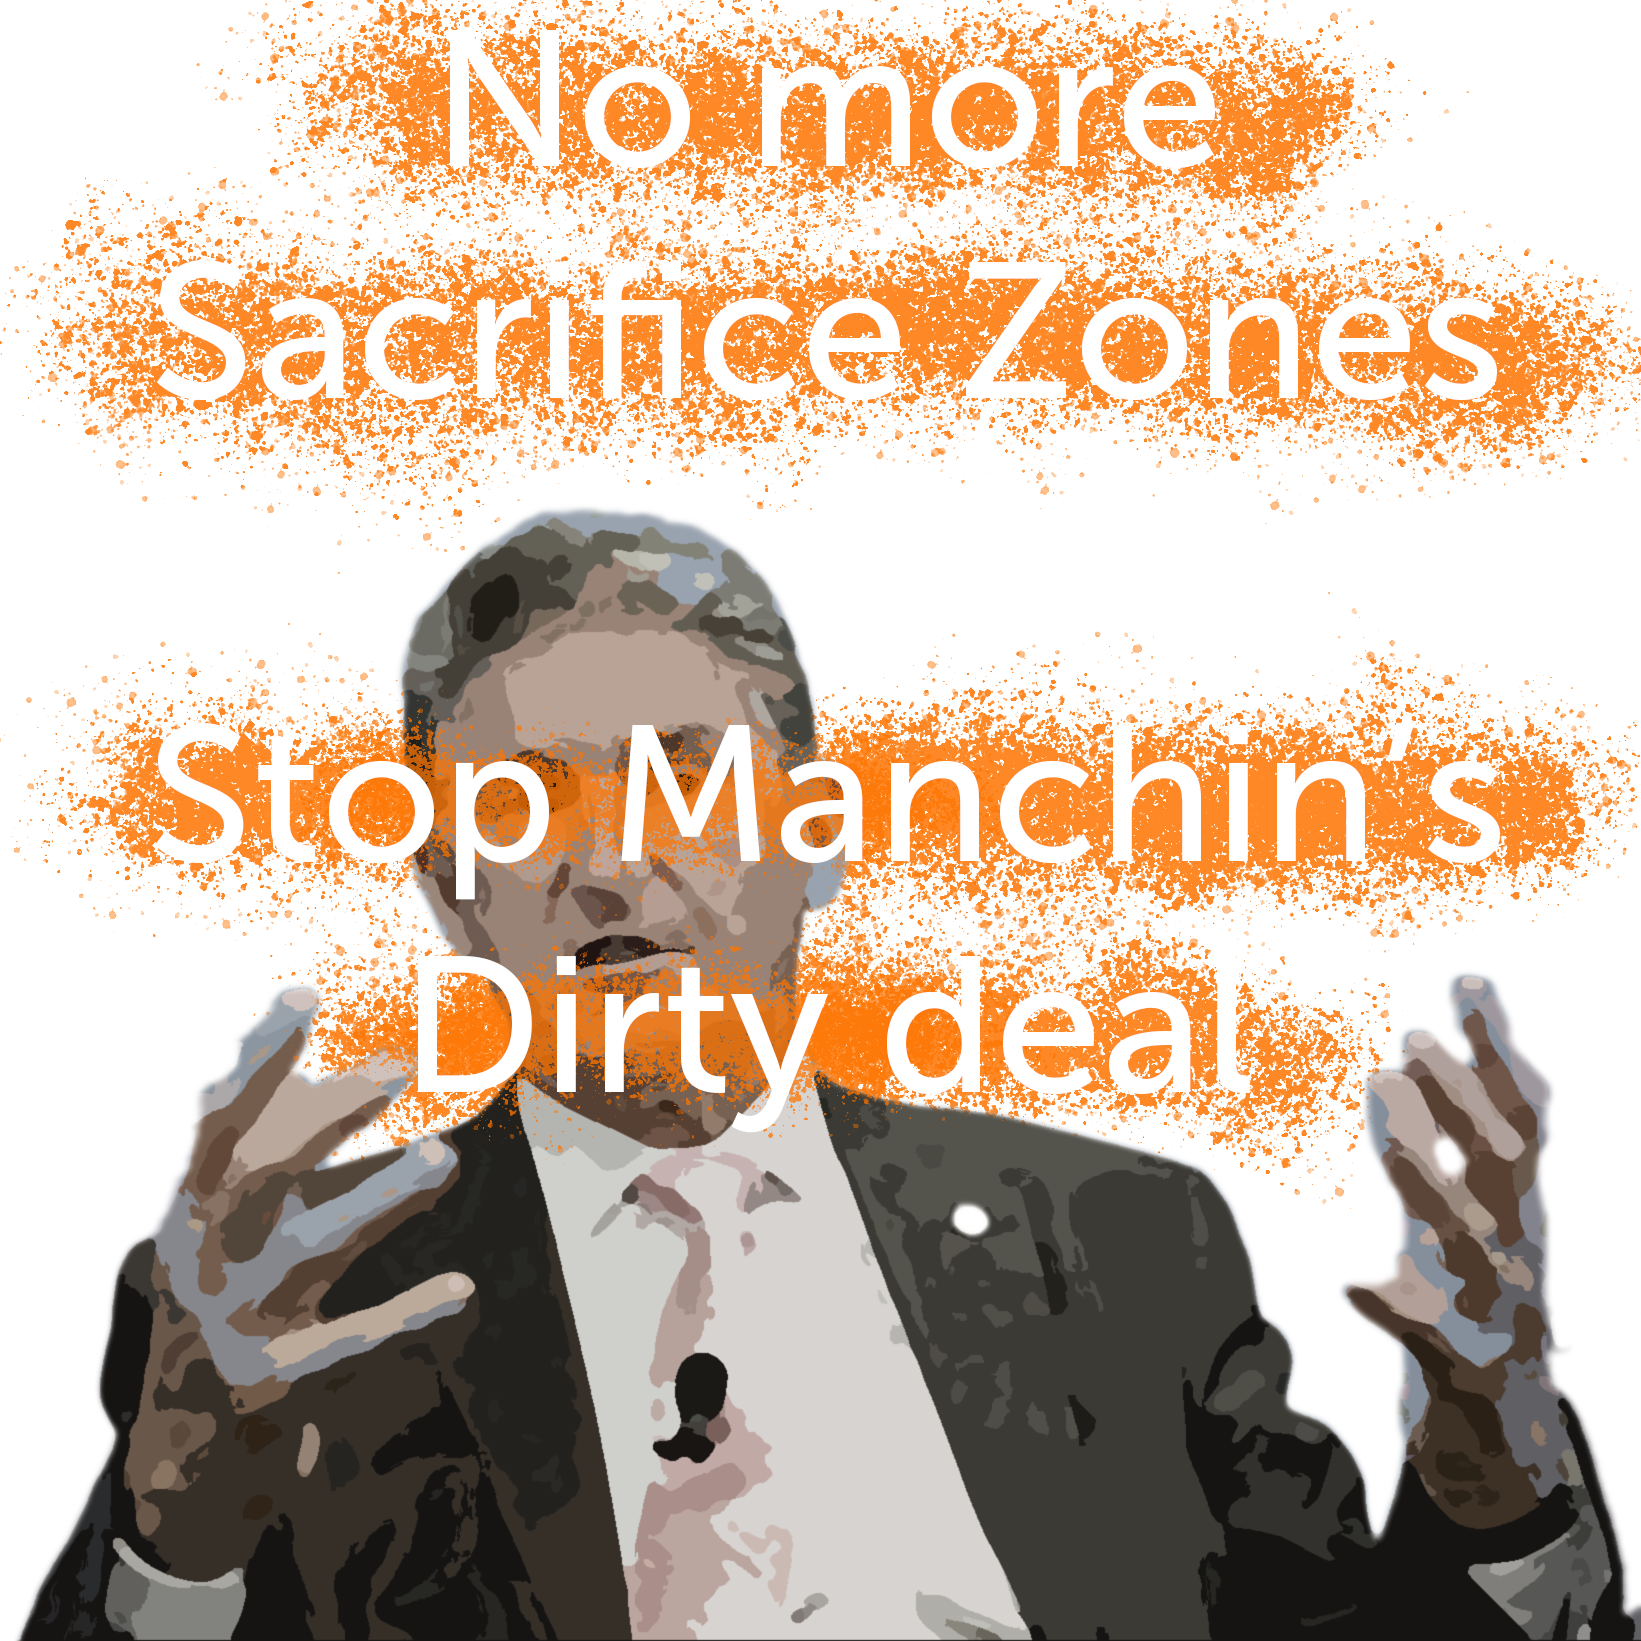 No more sacrifice zones. Stop Manchin's dirty deal.